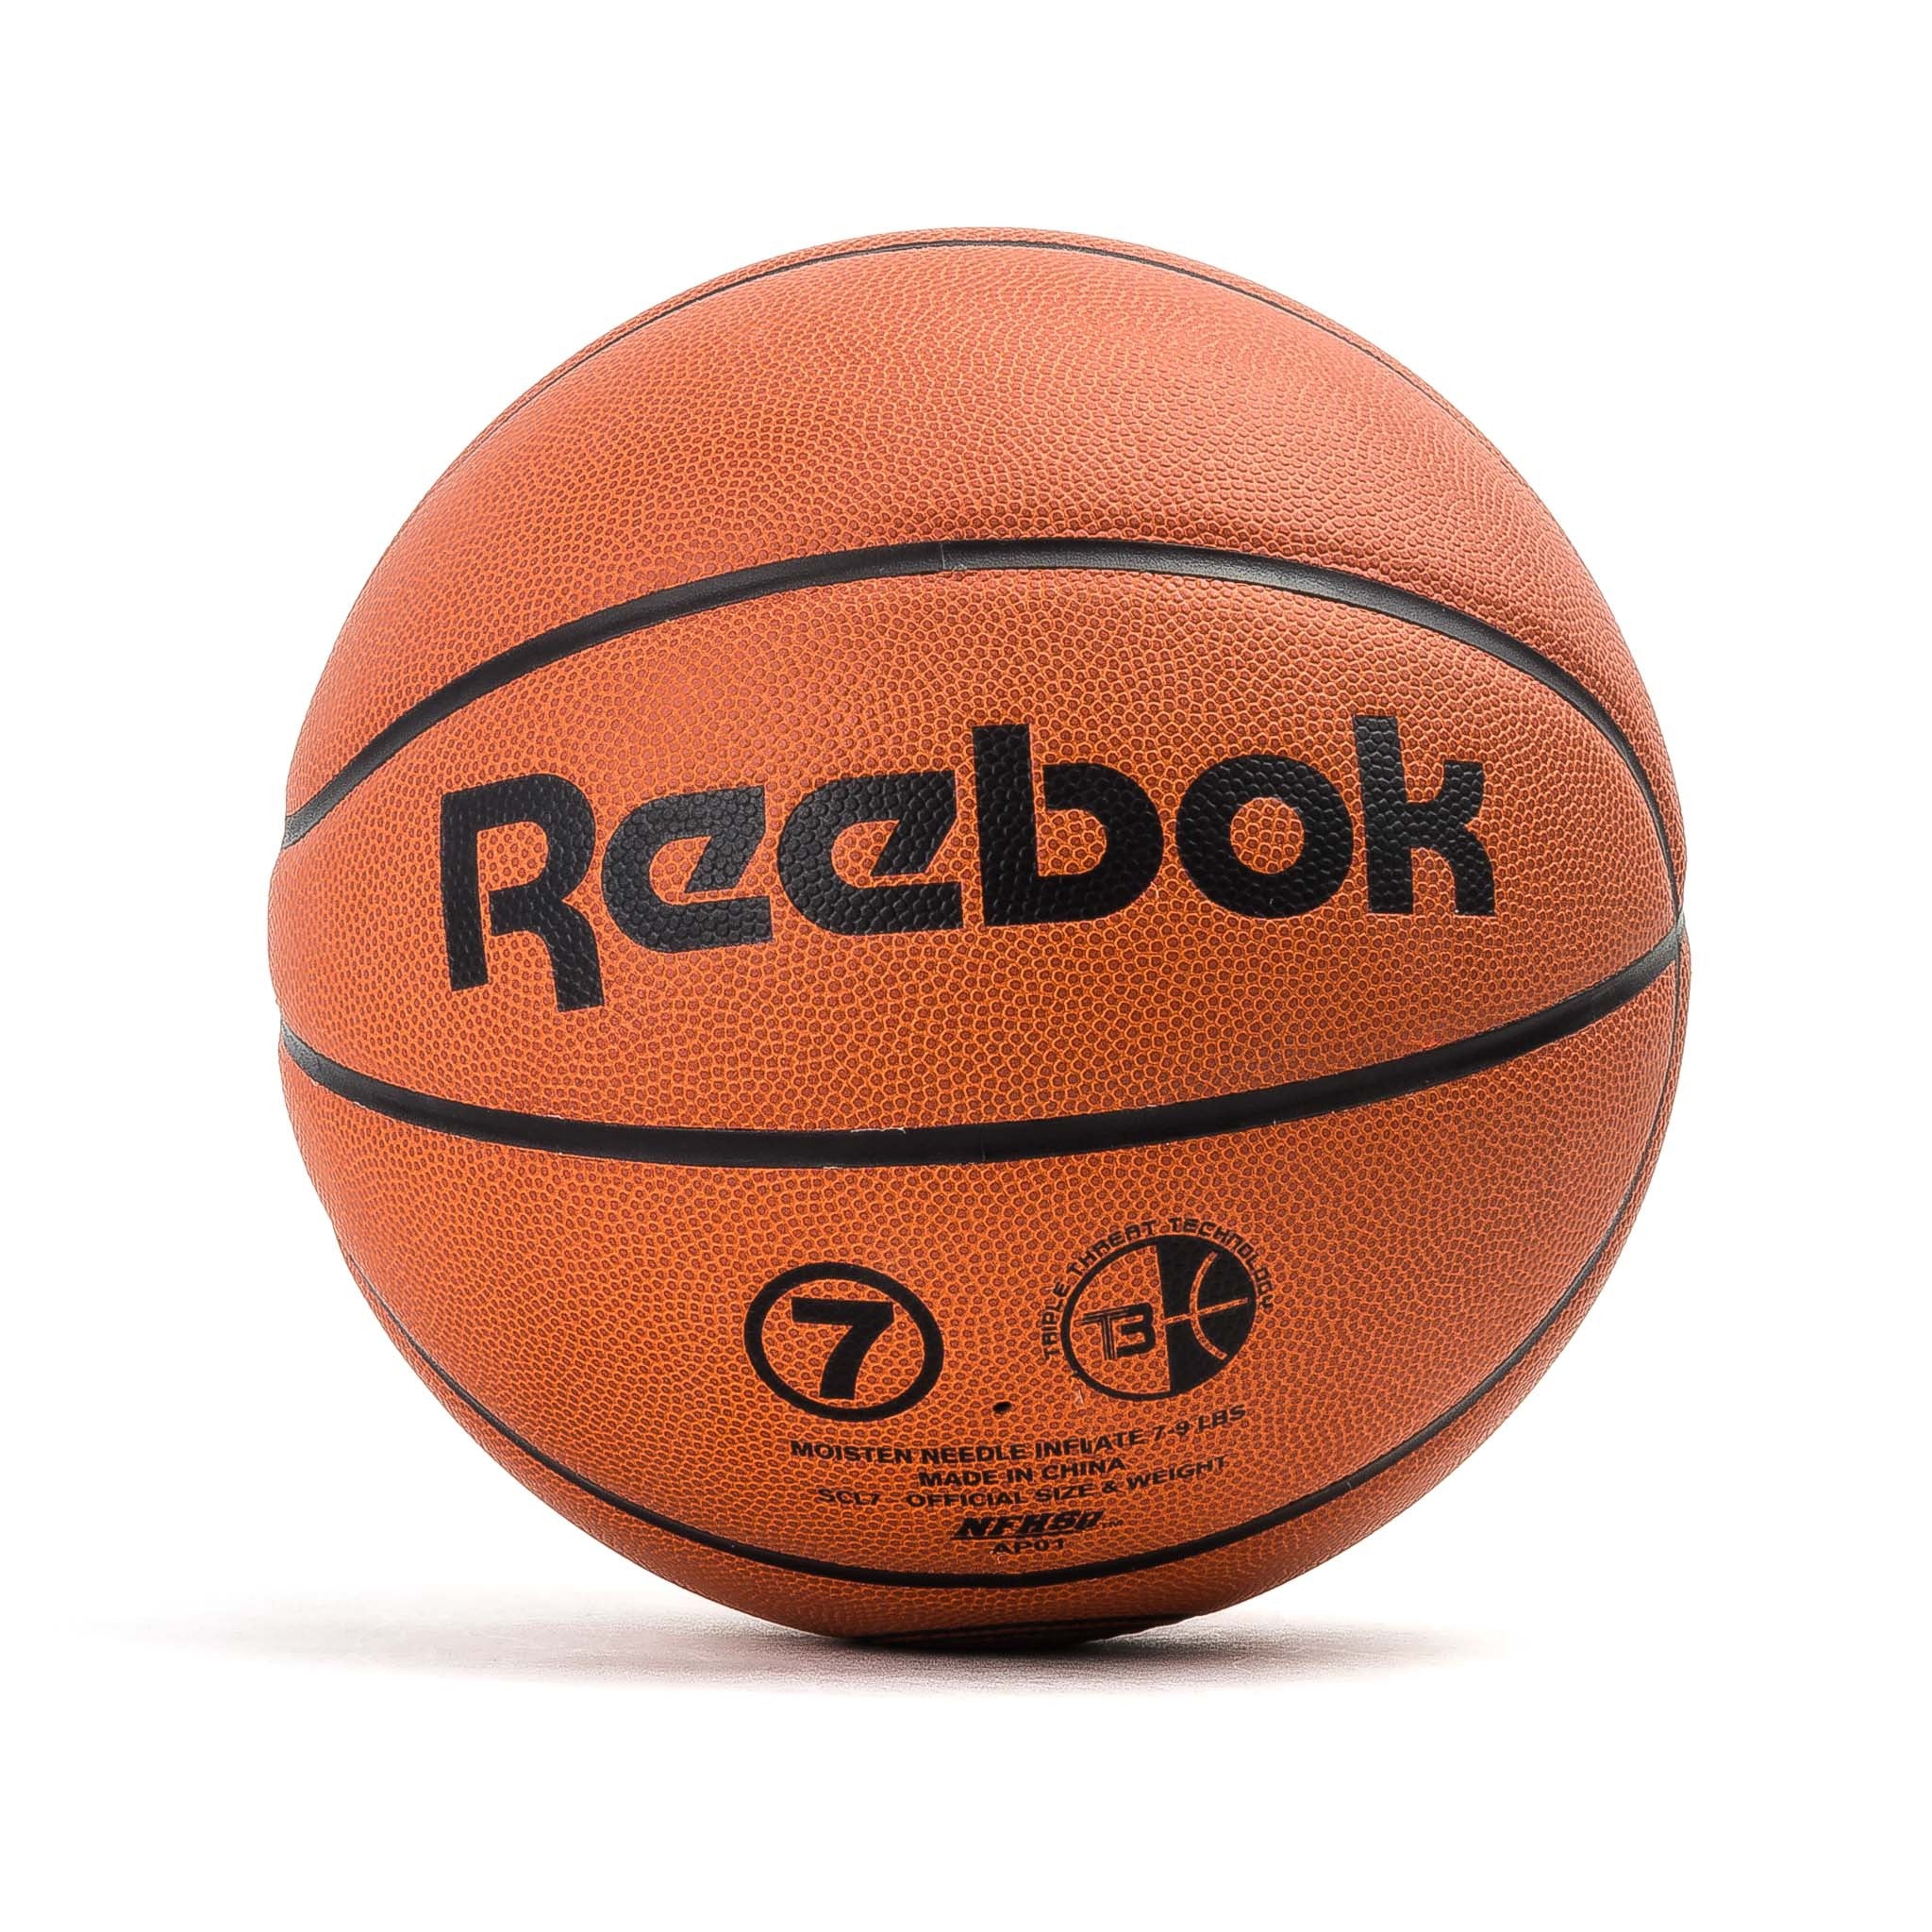 JmksportShops x Reebok Basketball